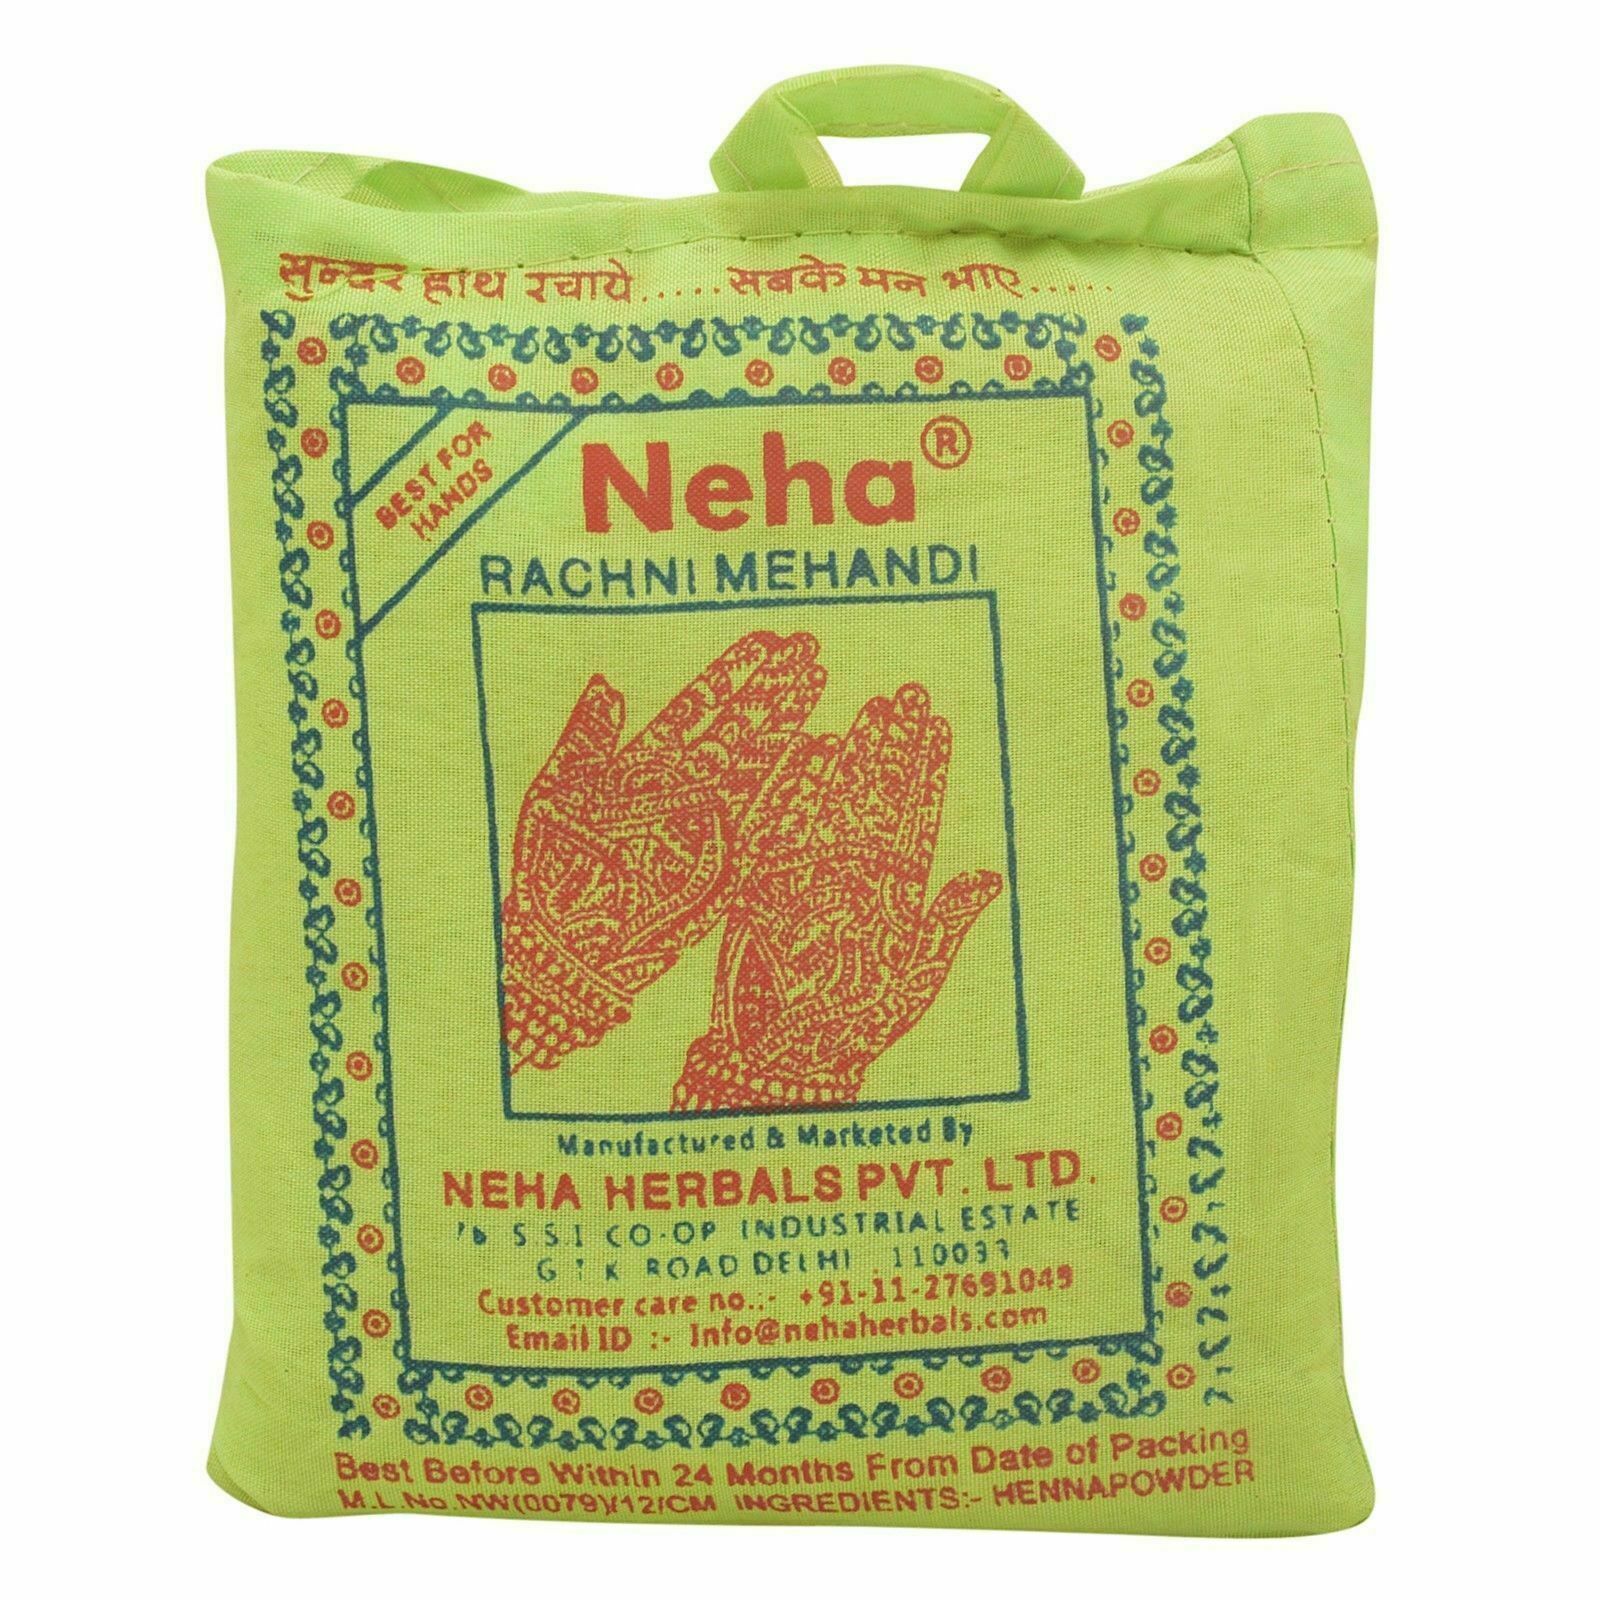 Neha Rachani Mehndi 100% Pure Herbal Henna Powder For Hair Coloring 500 Gm Pack